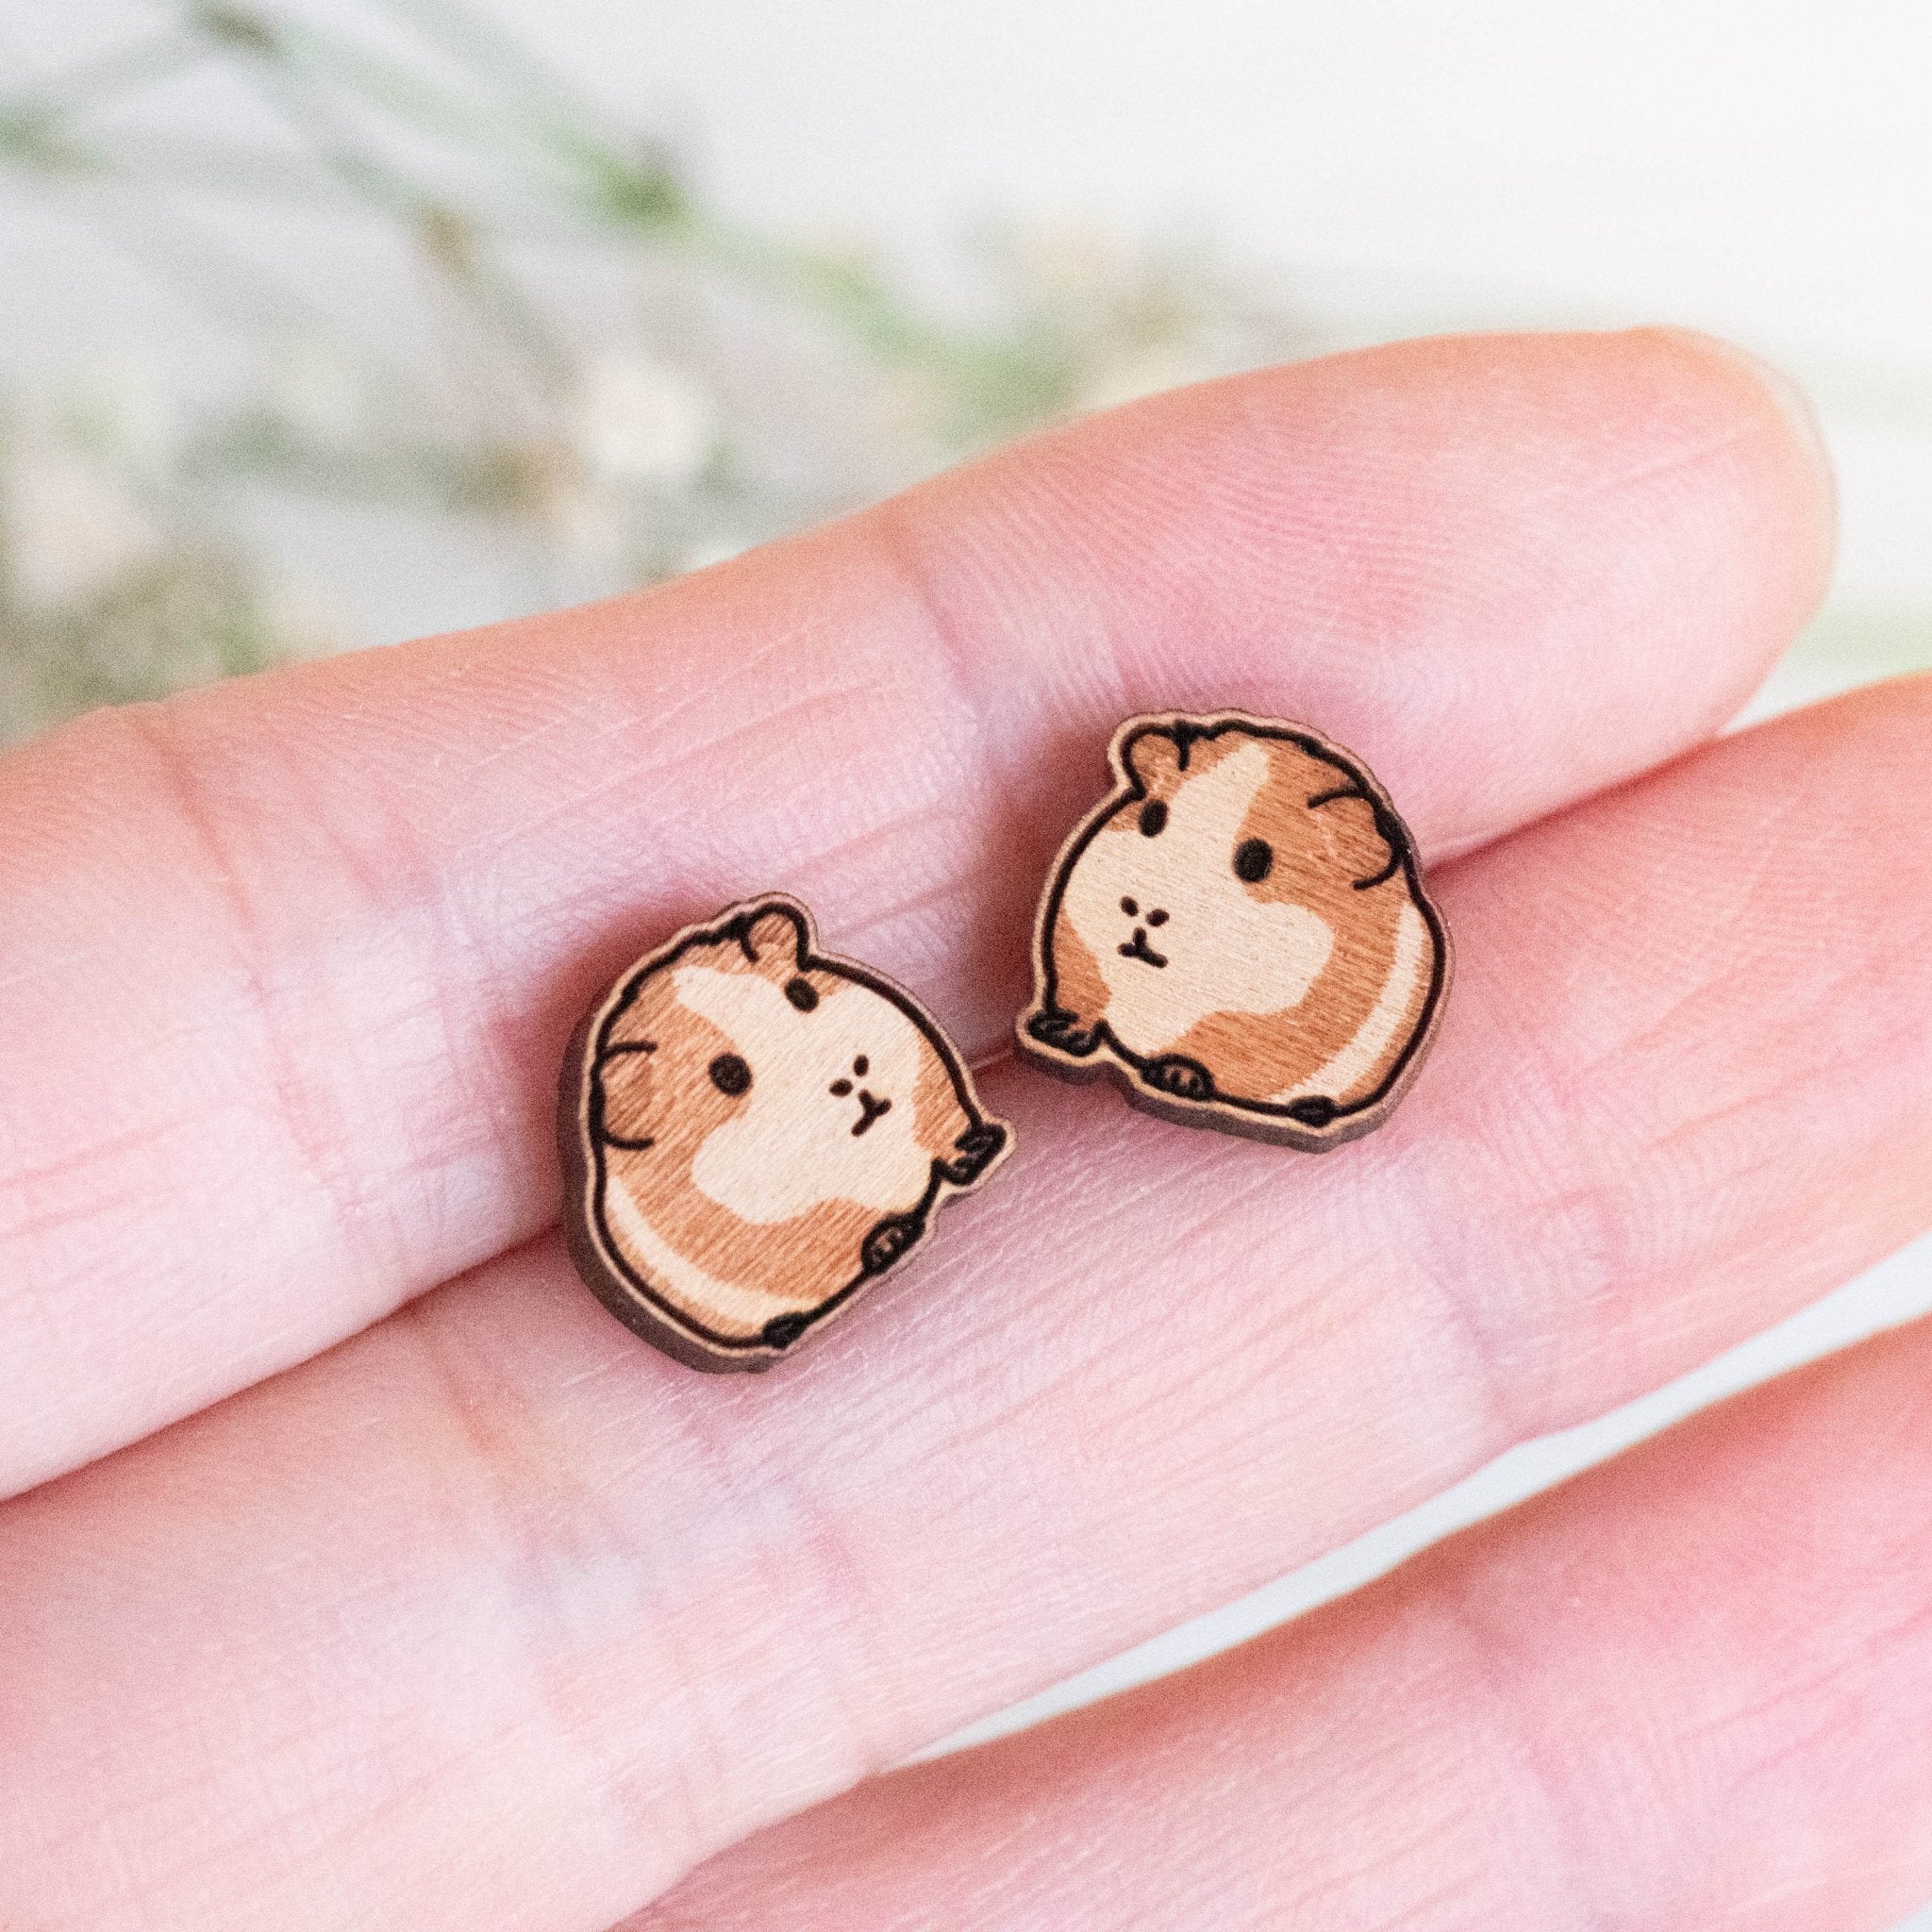 guinea pig stud earrings wooden earrings